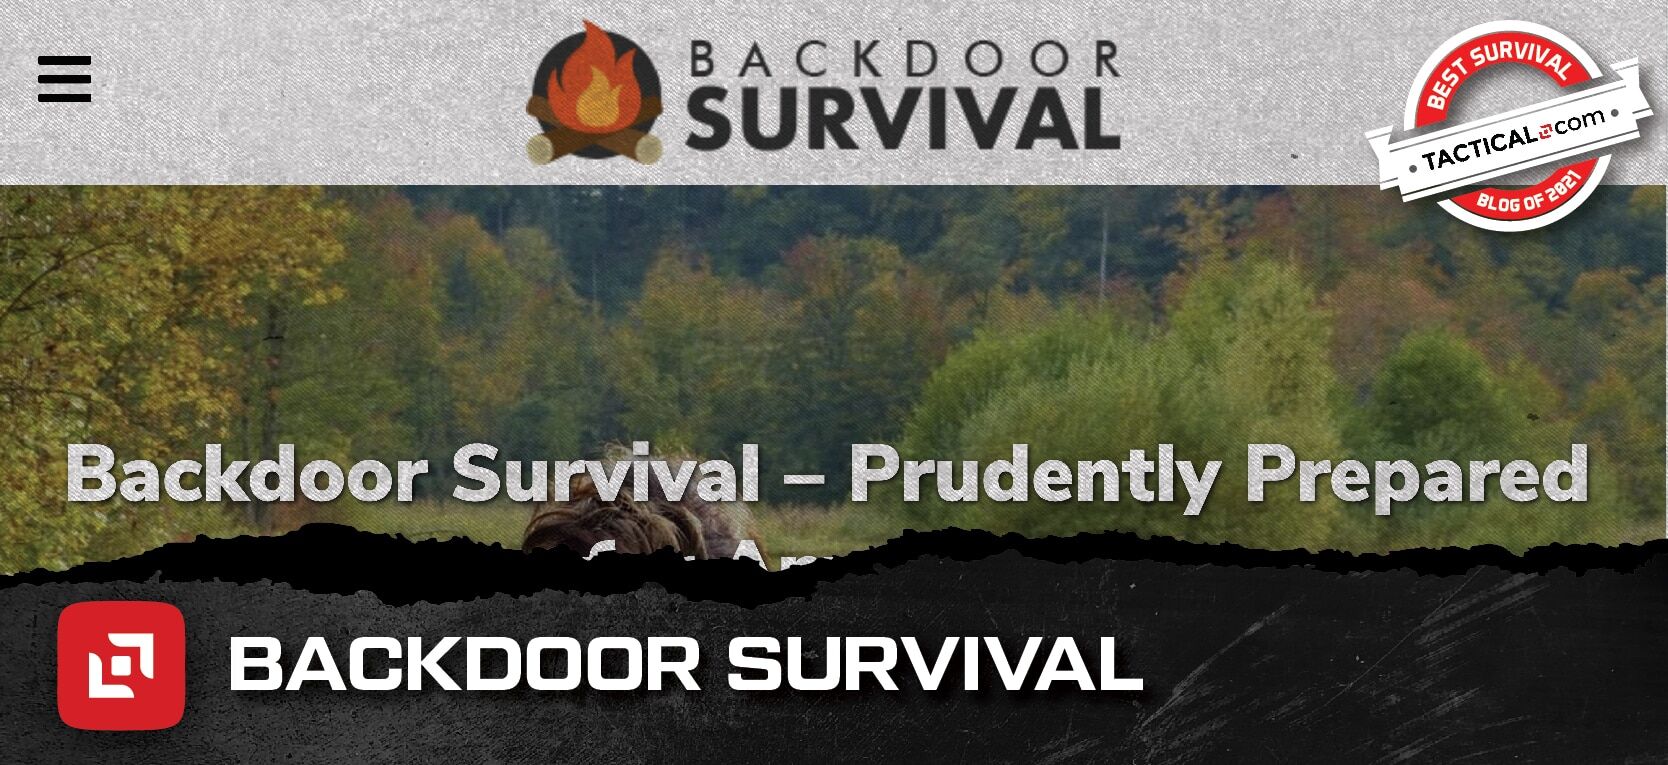 Backdoor Survival homepage